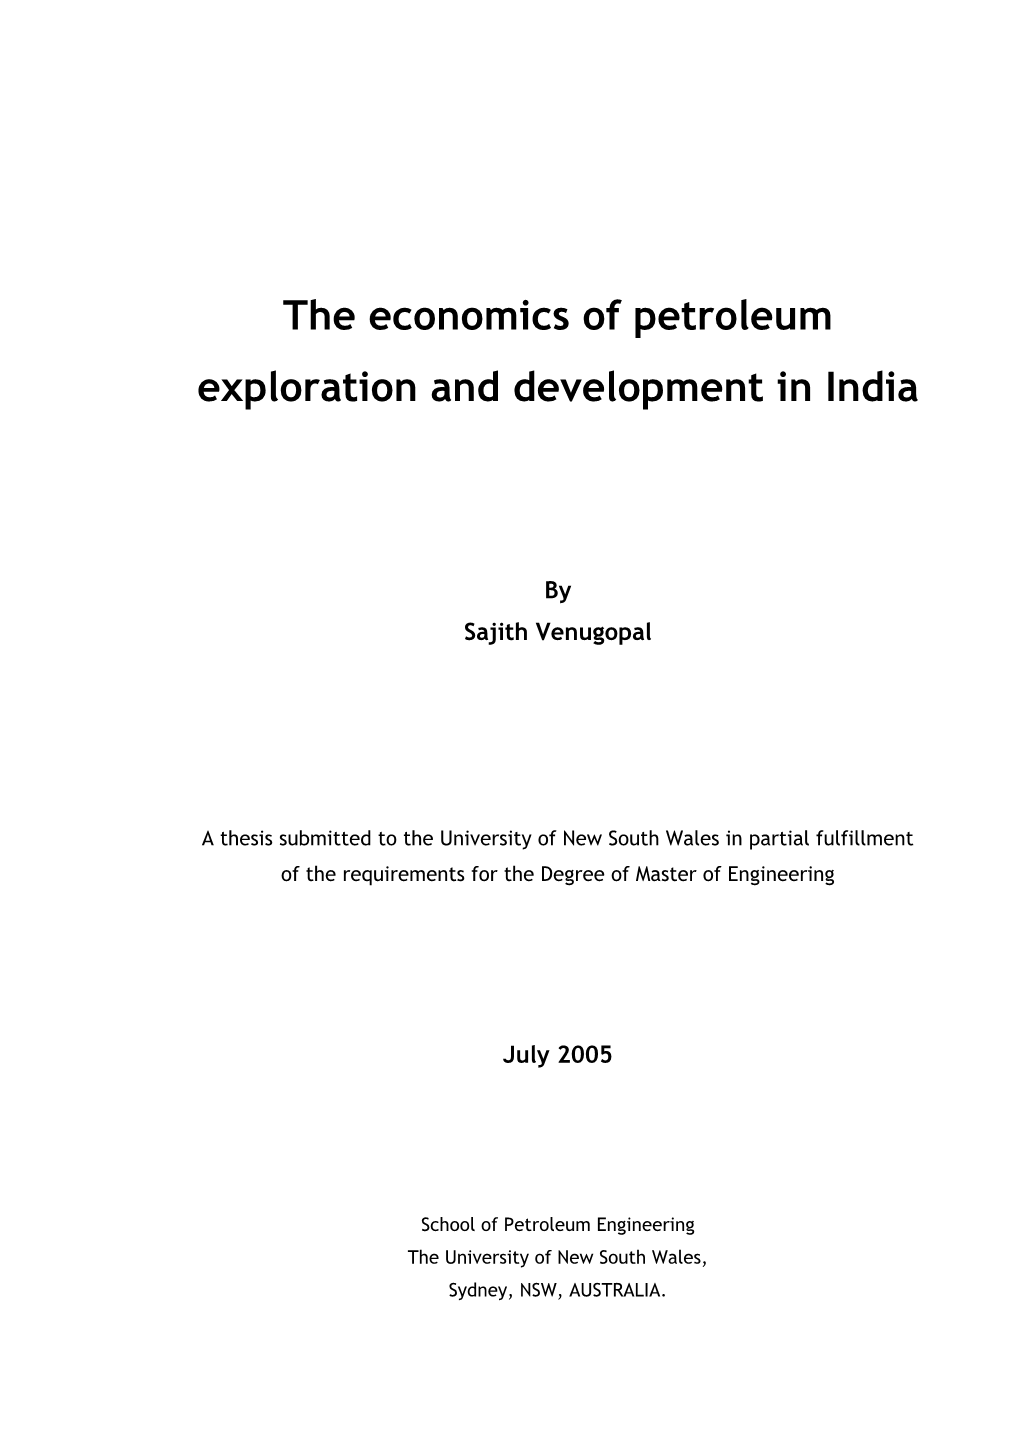 The Economics of Petroleum Exploration and Development in India